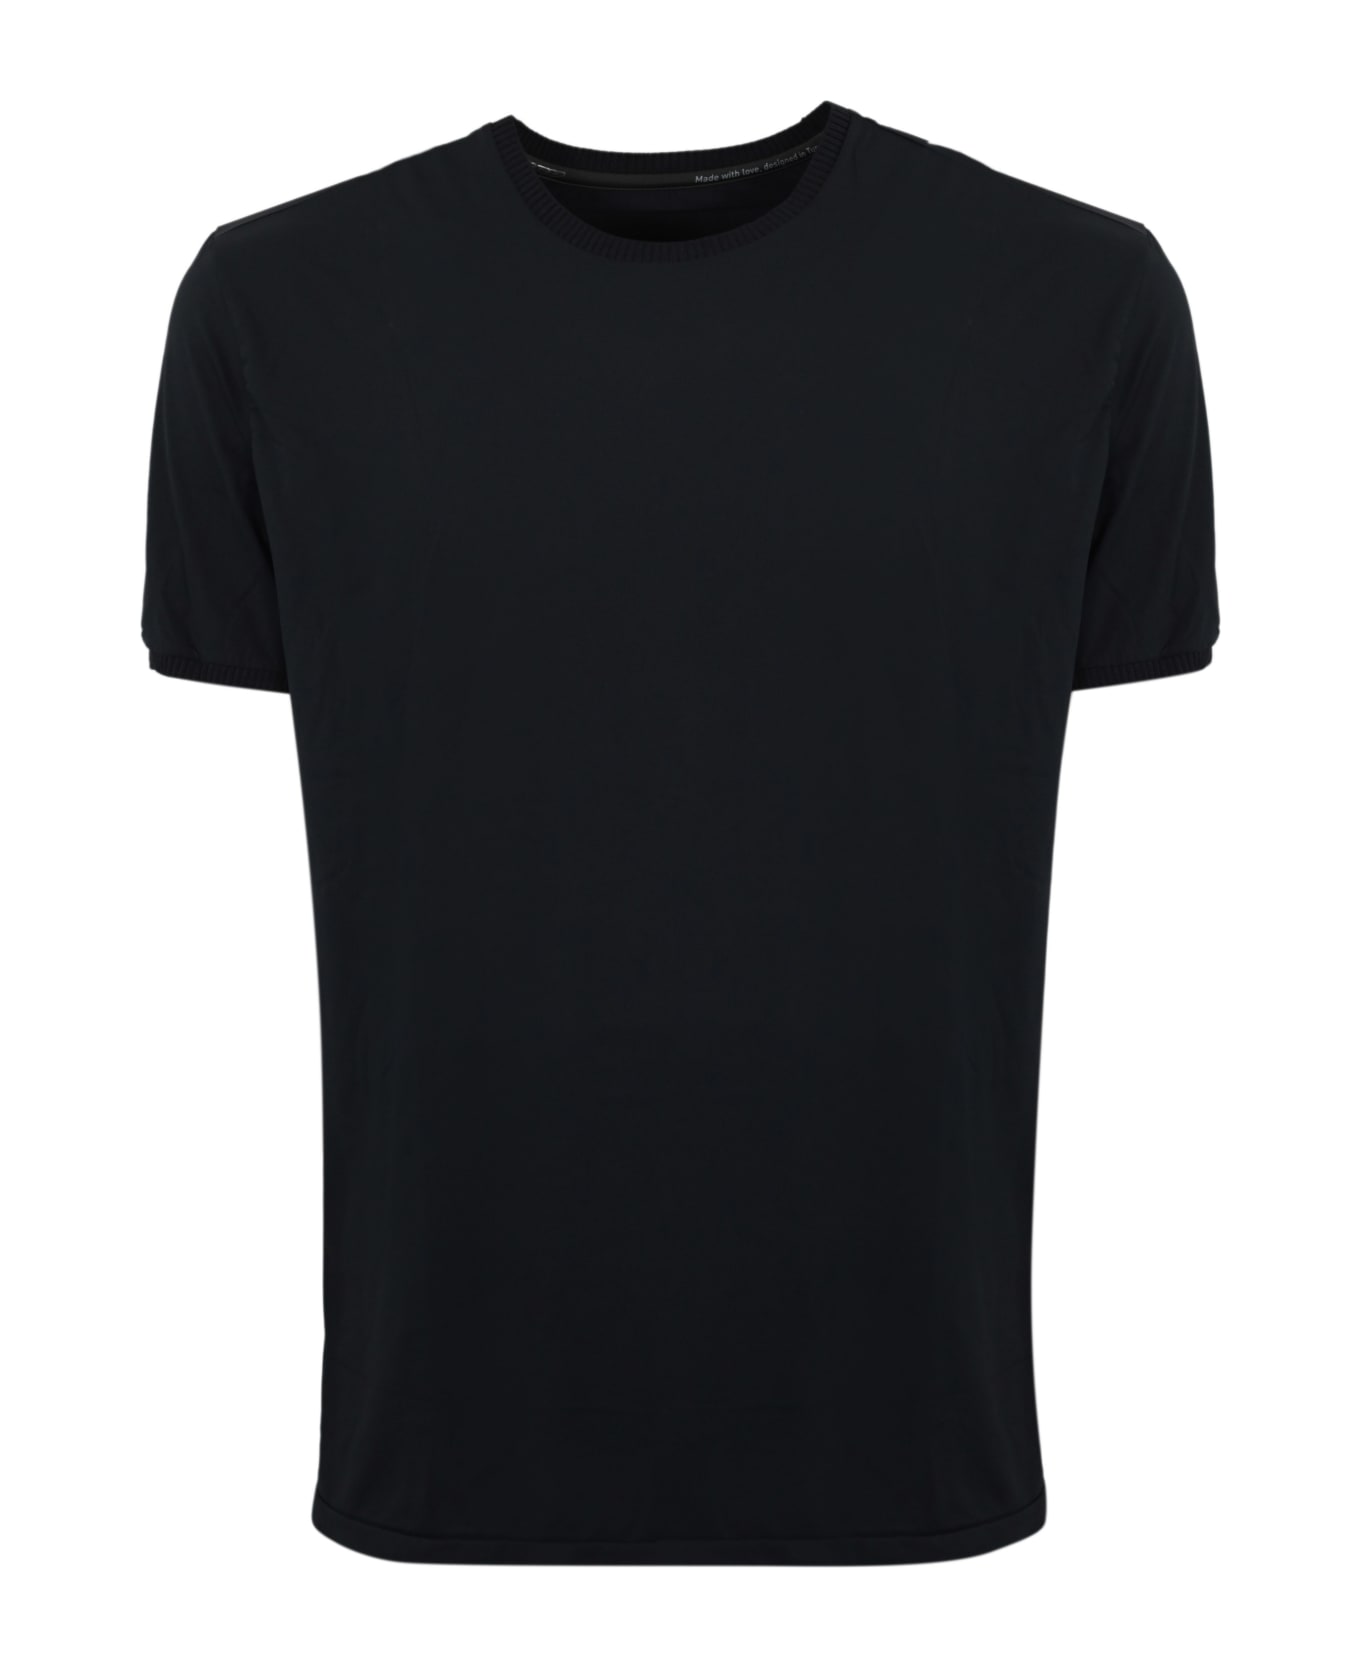 RRD - Roberto Ricci Design Gdy Oxford T-shirt - Blue black